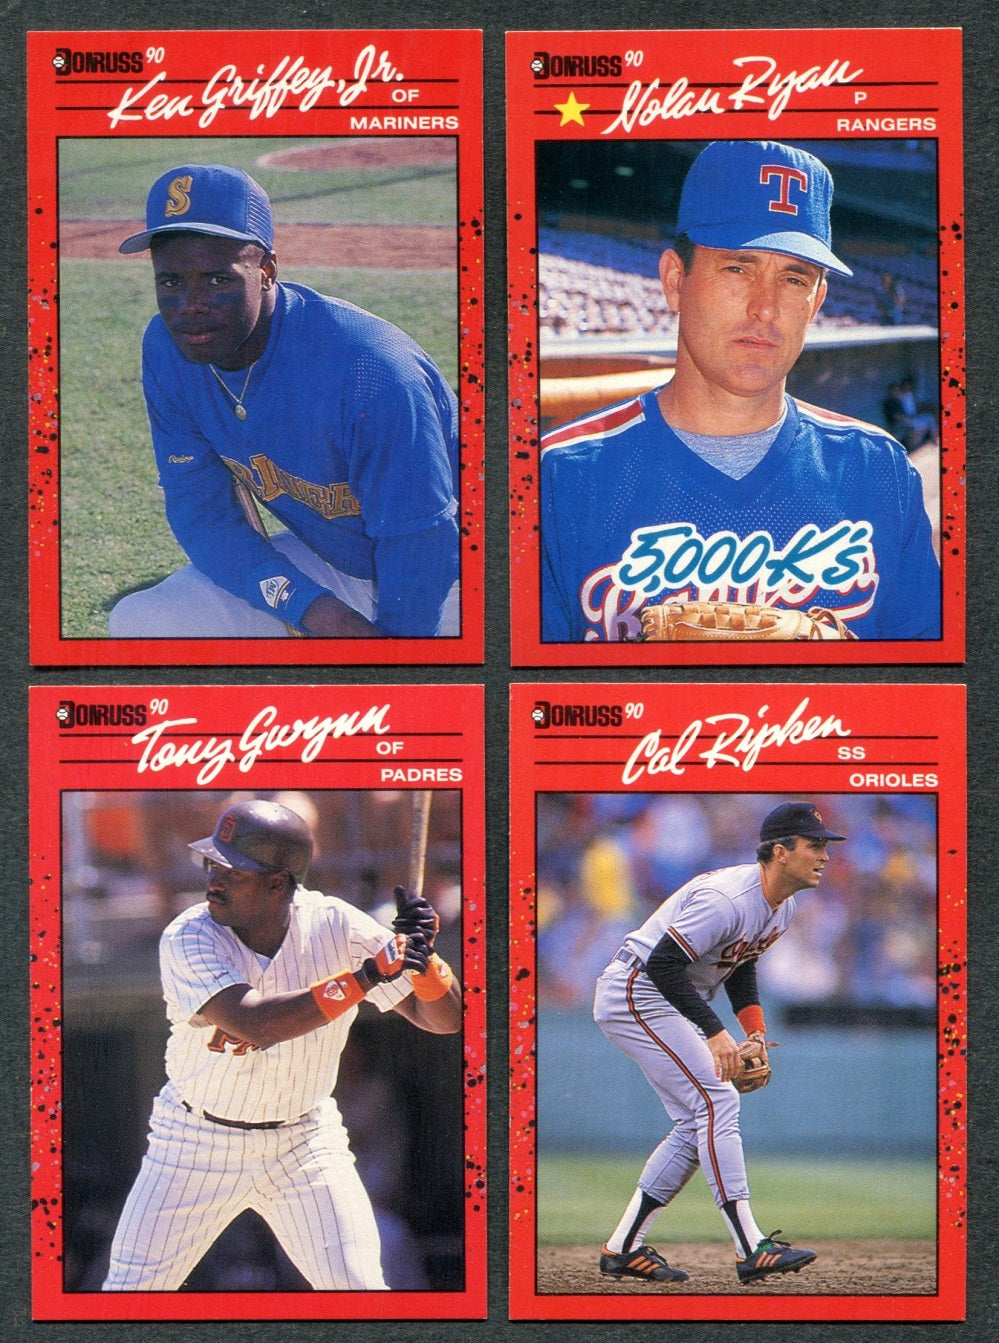 1990 Donruss Baseball Complete Set (716)